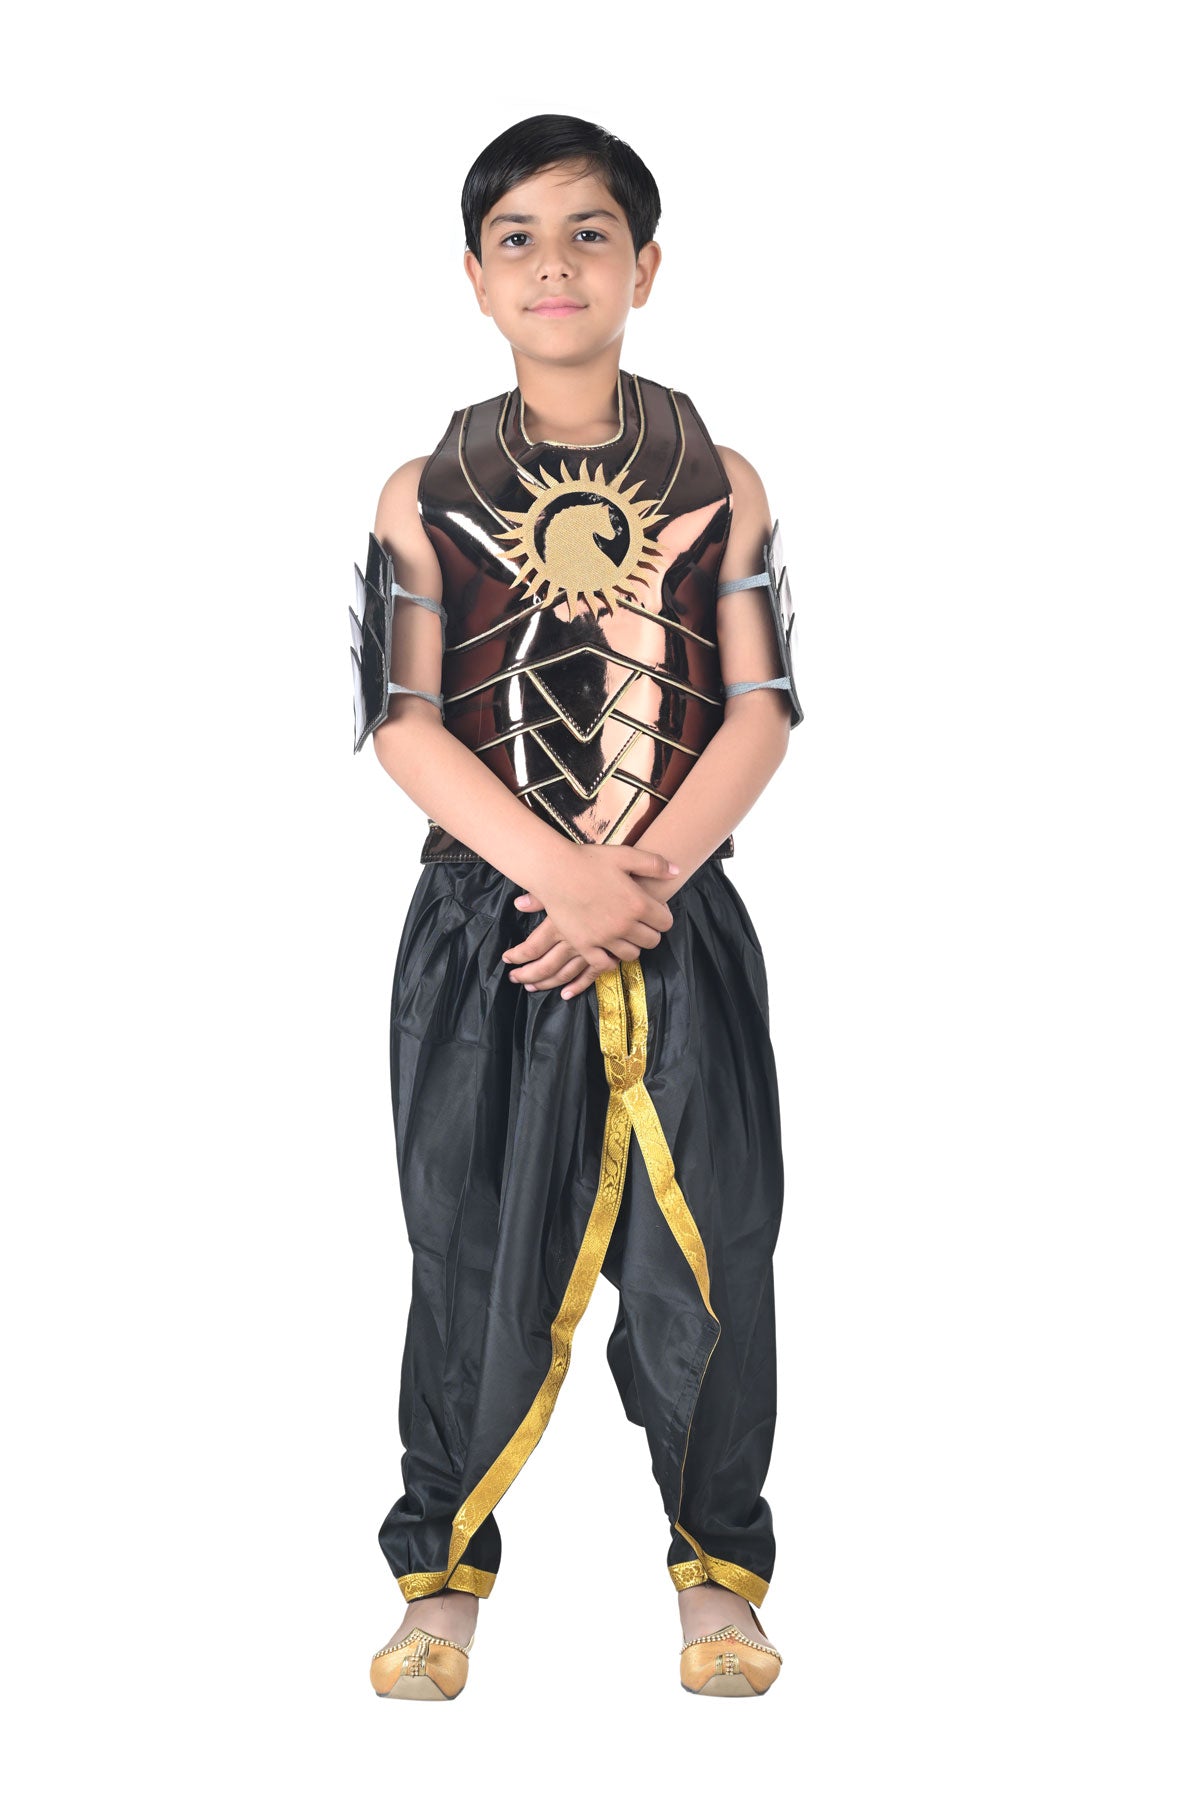 bahubali costume for fancy dress